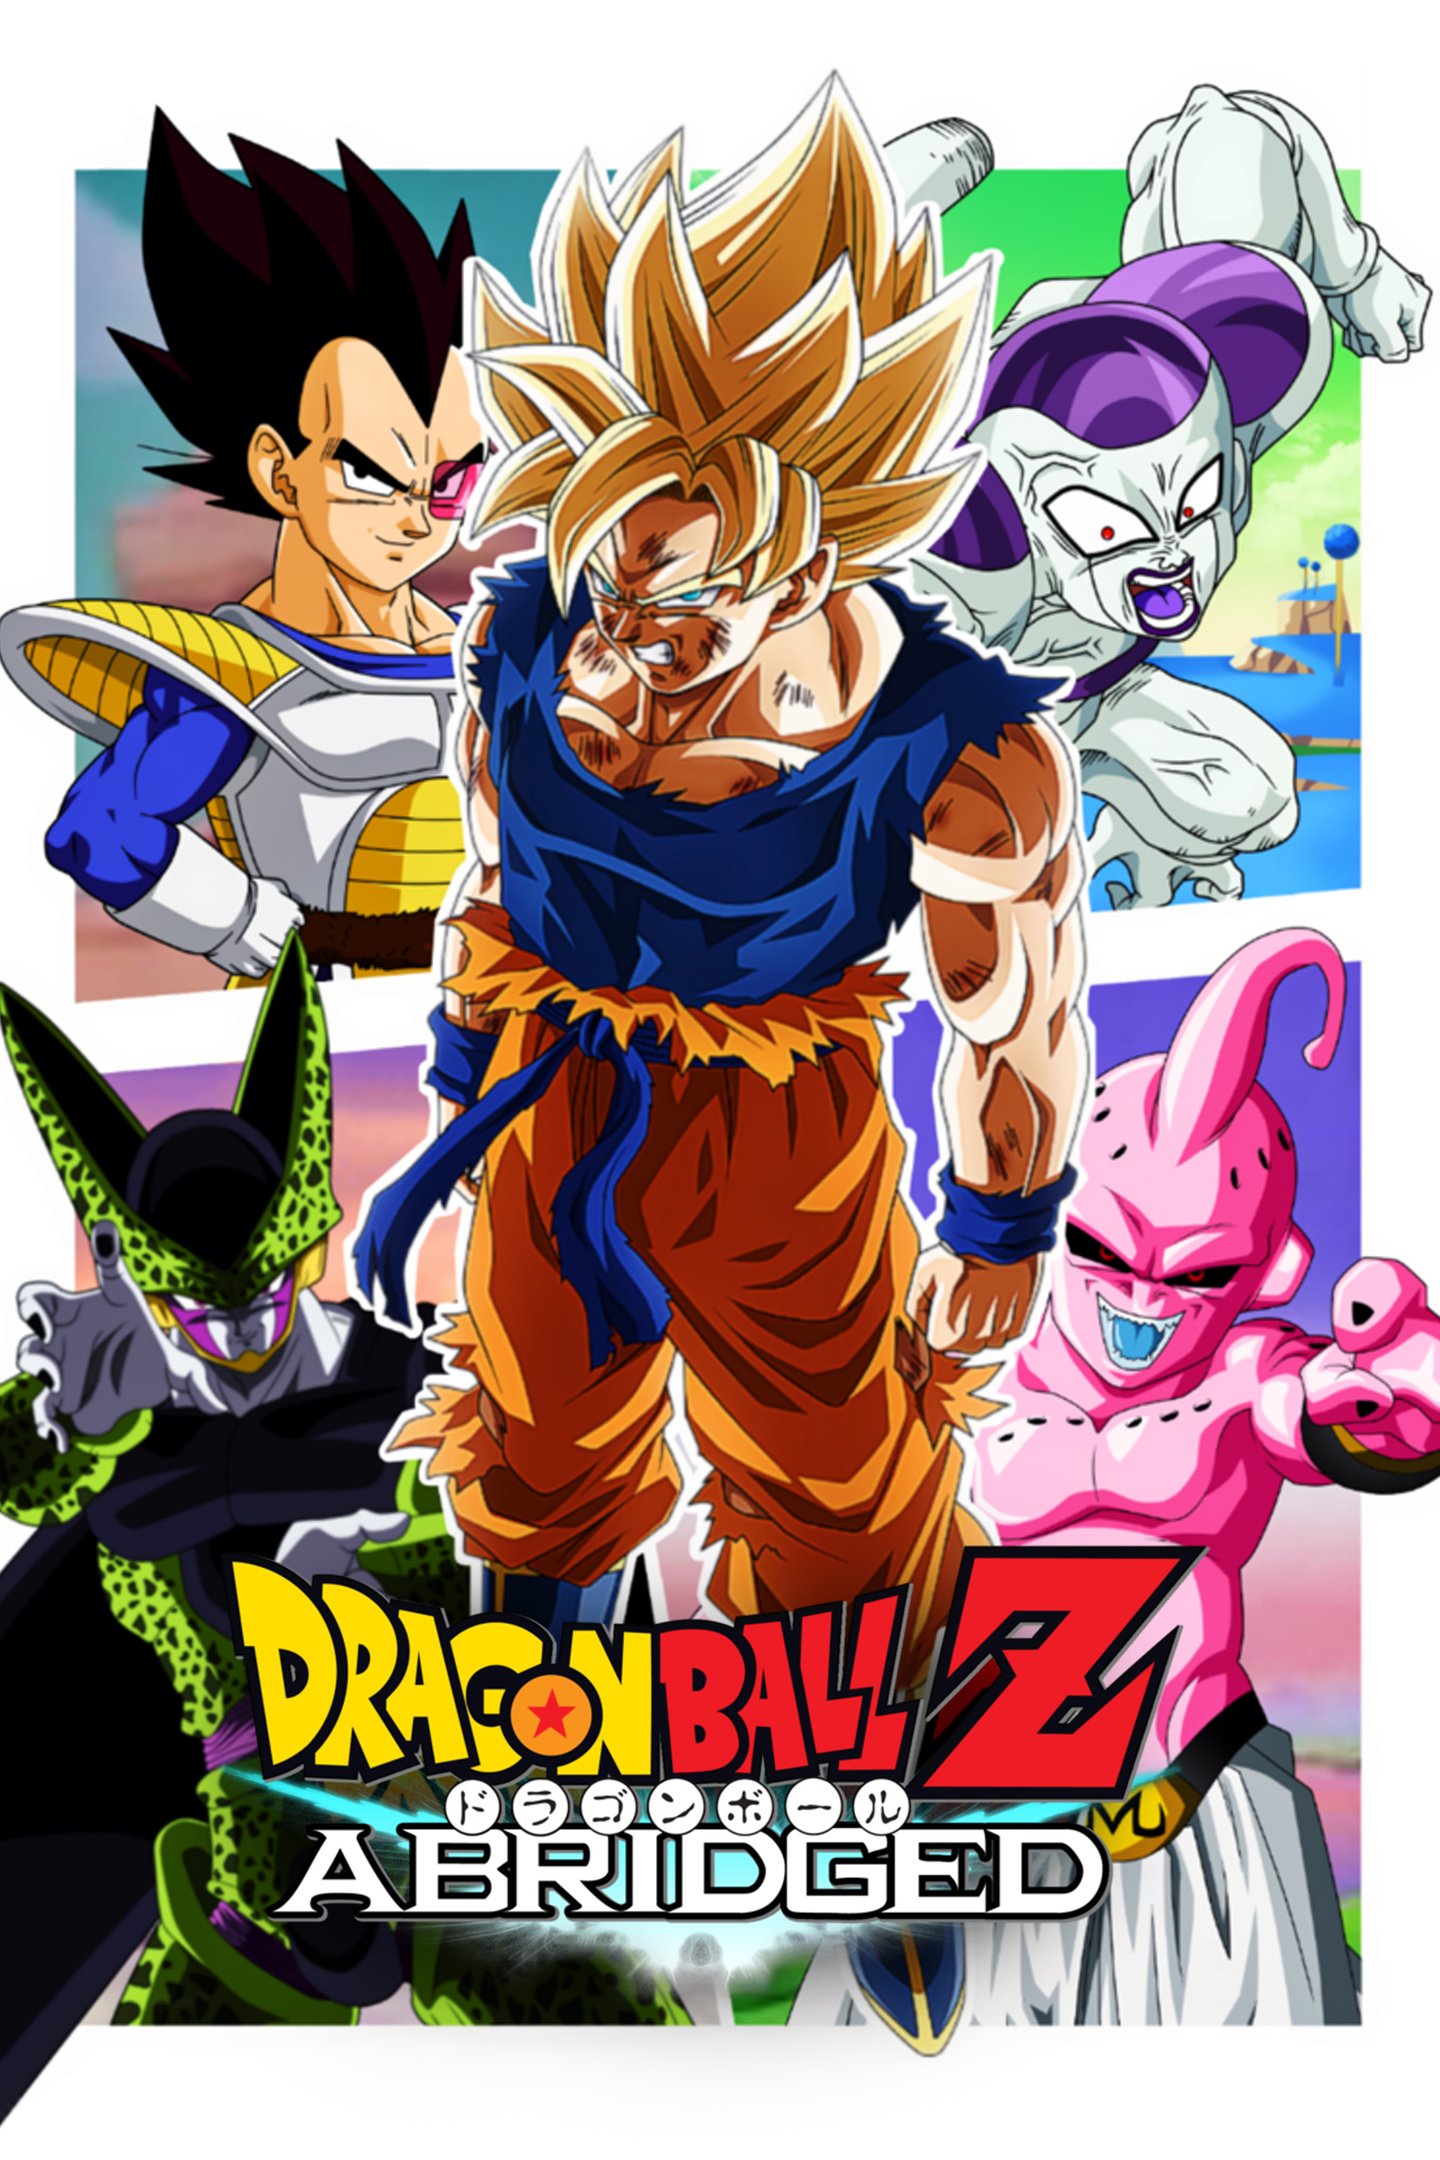 Dragon Ball Z: veja o guia completo de todas as sagas do anime